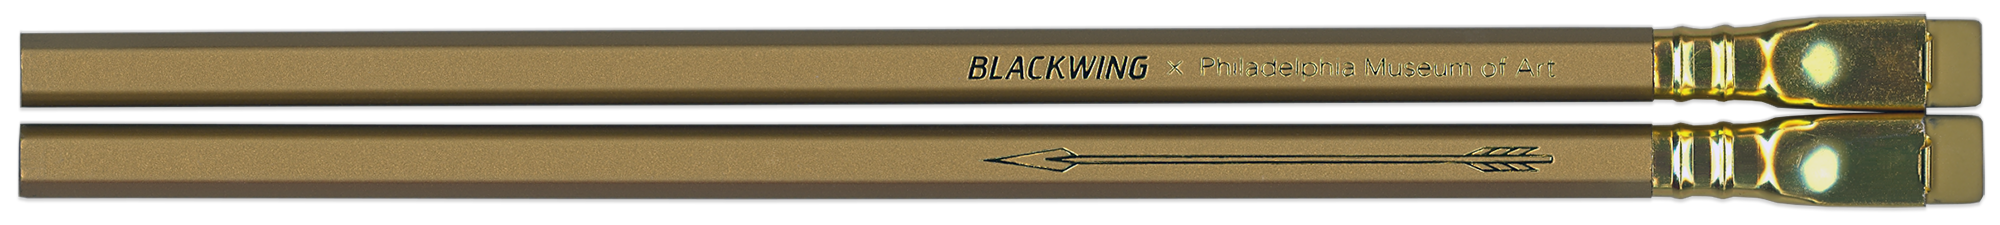 Blackwing X - Philadelphia Museum of Art by Palomino | Brand Name